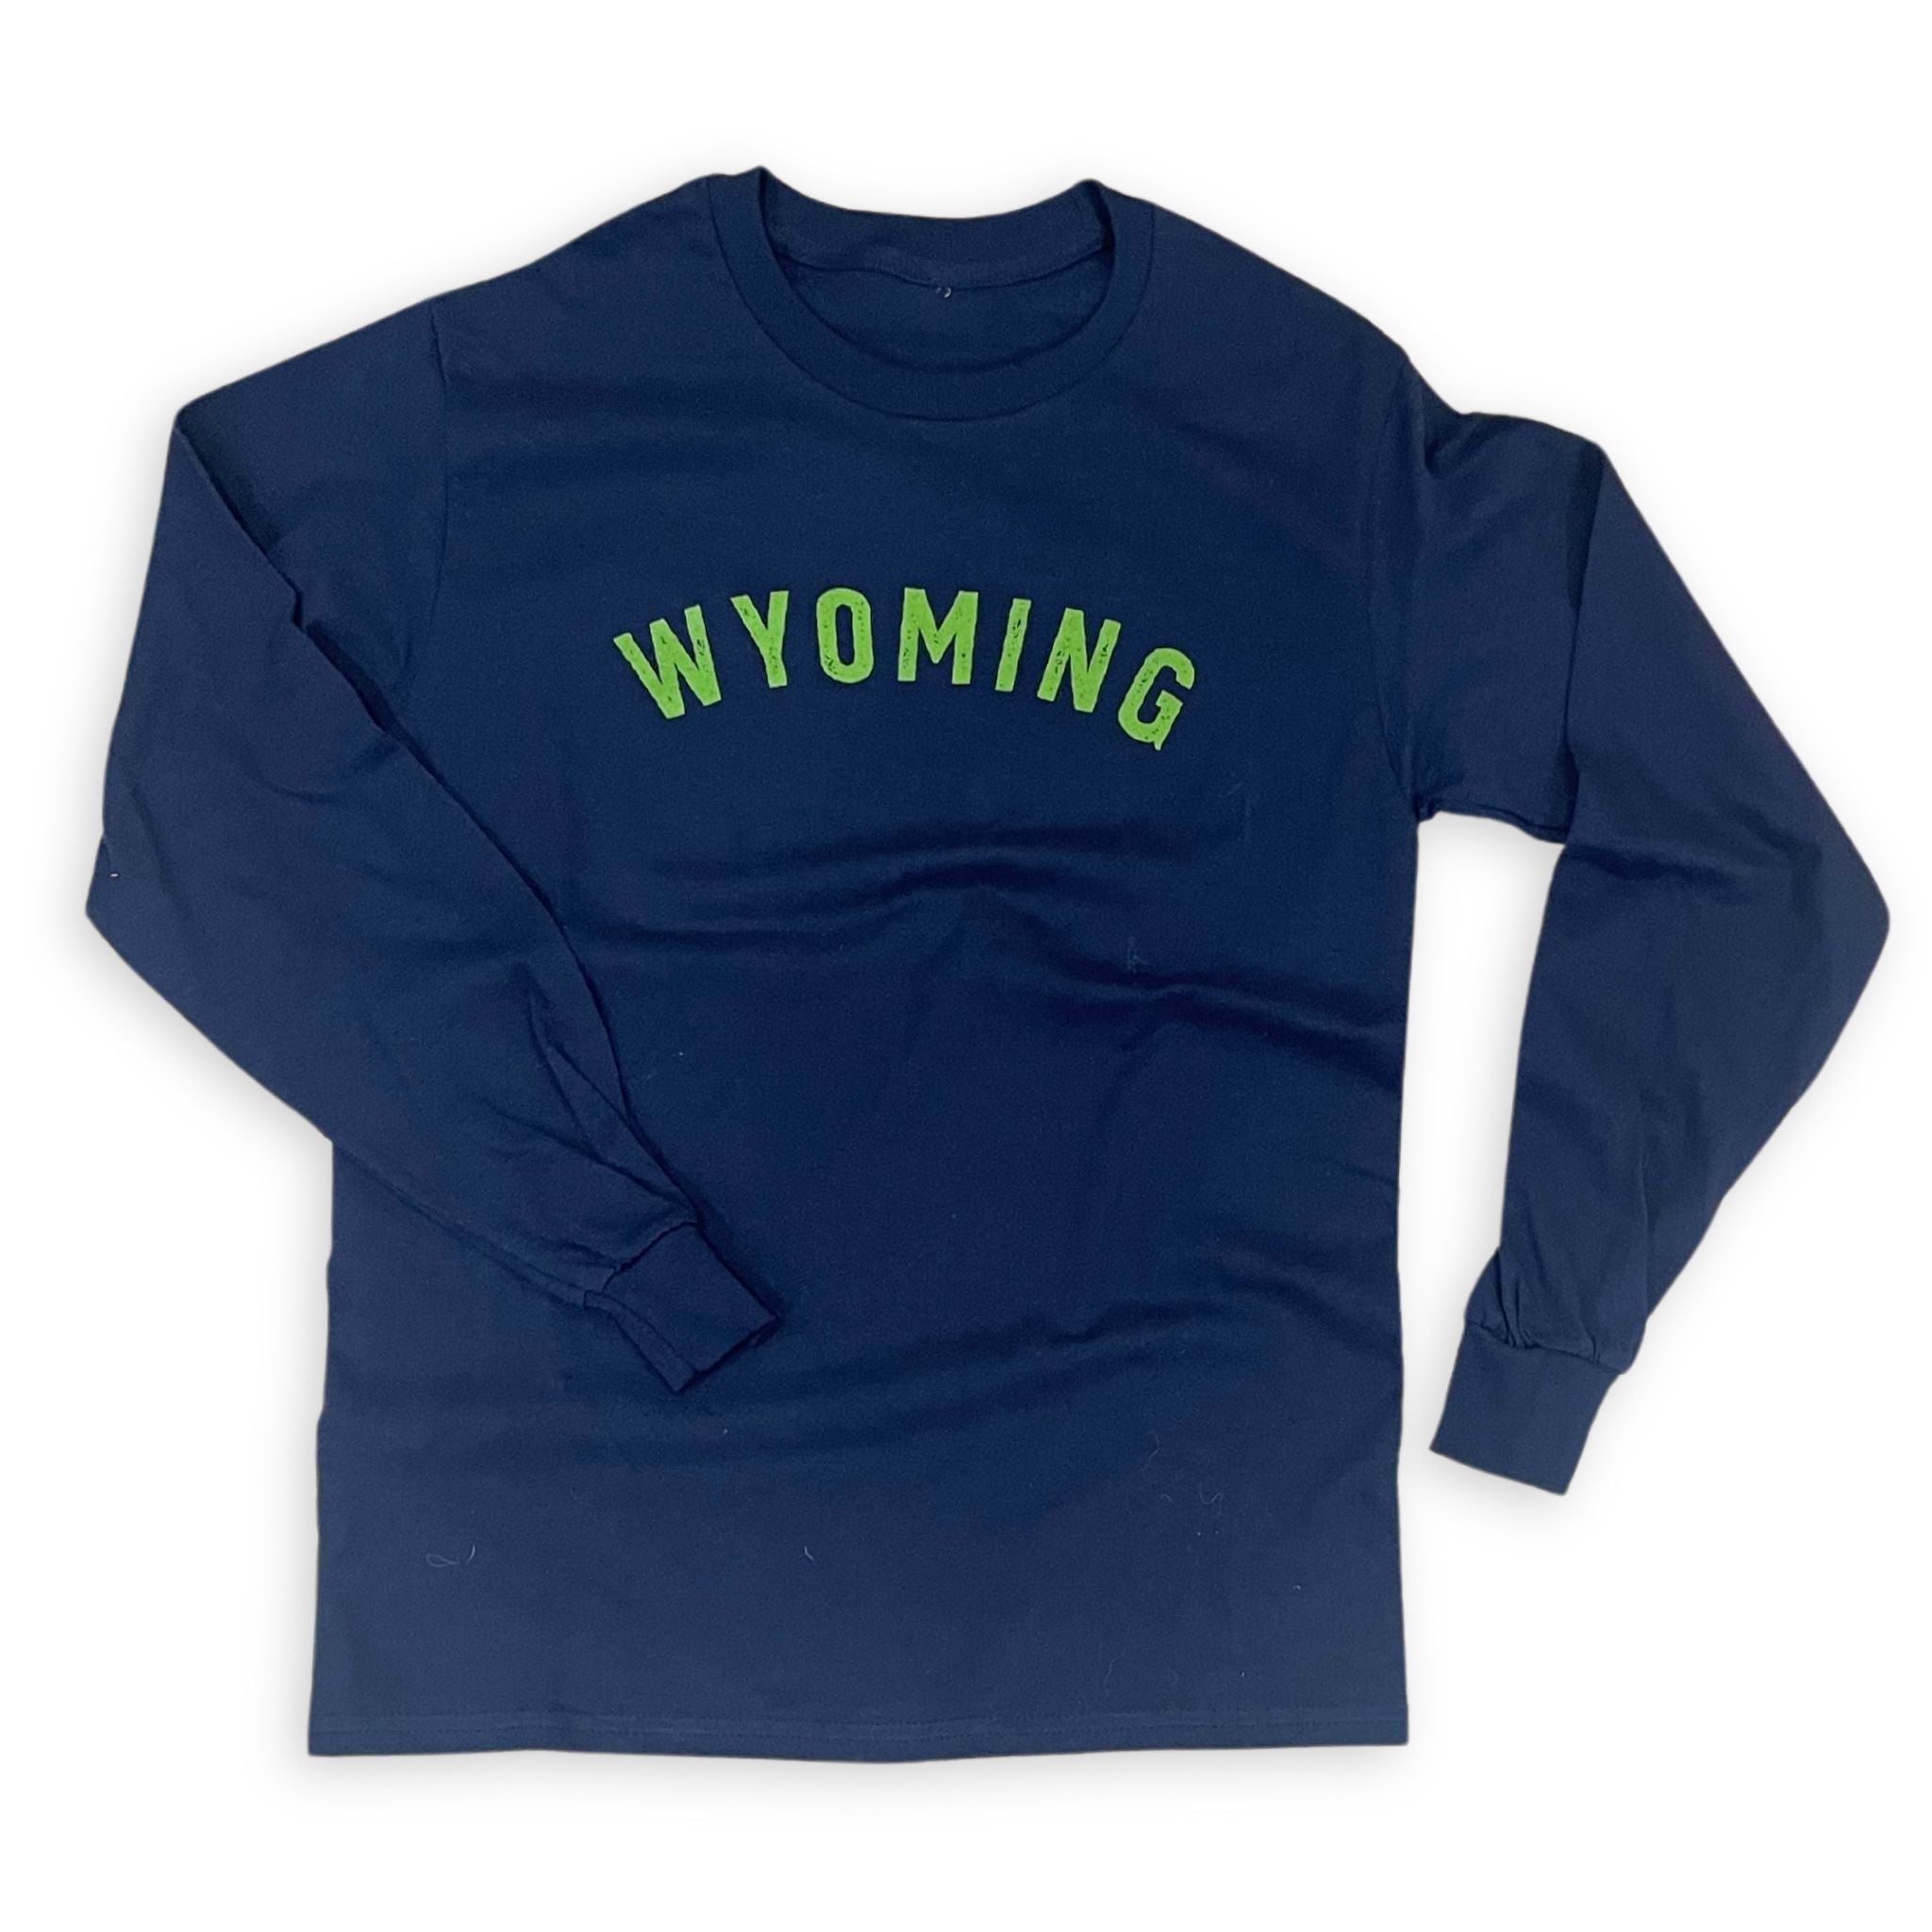 Wyoming Long Sleeve